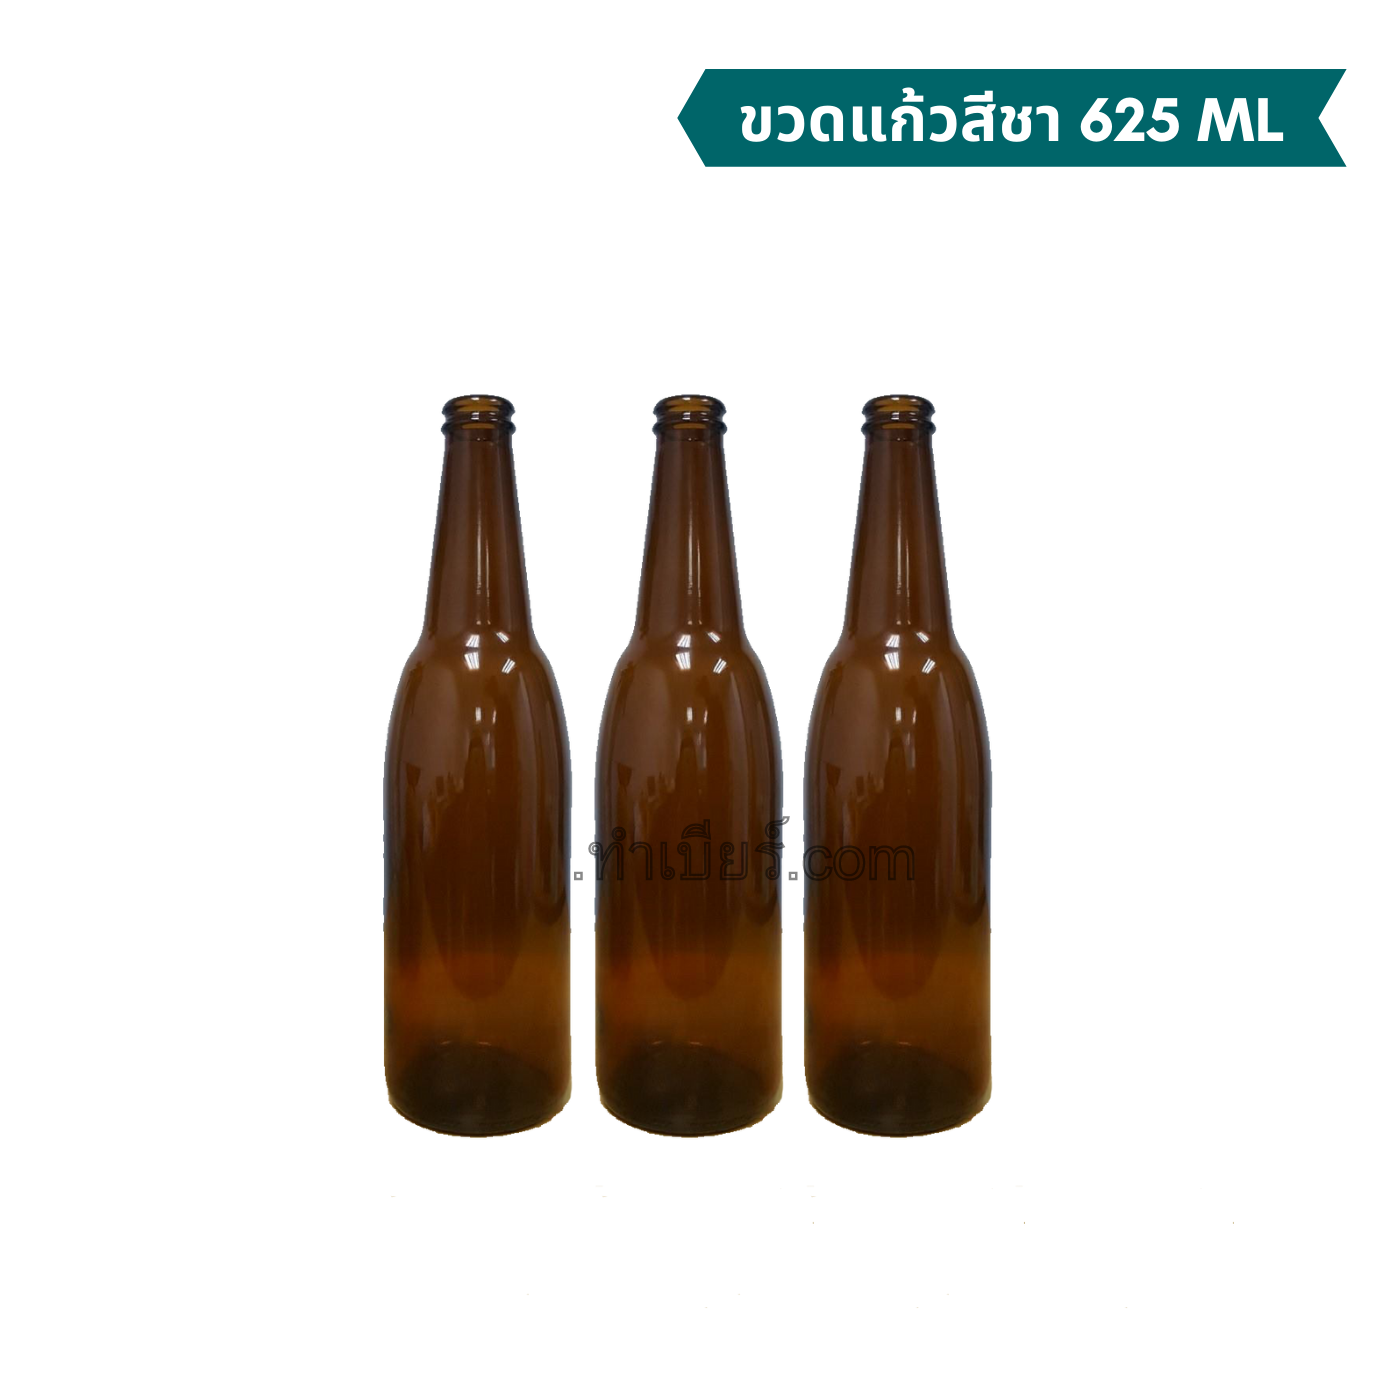 Glass Bottle ขวดแก้วสีชา 625 ml (ขวดใหม่) แพ็คละ 21 ขวด